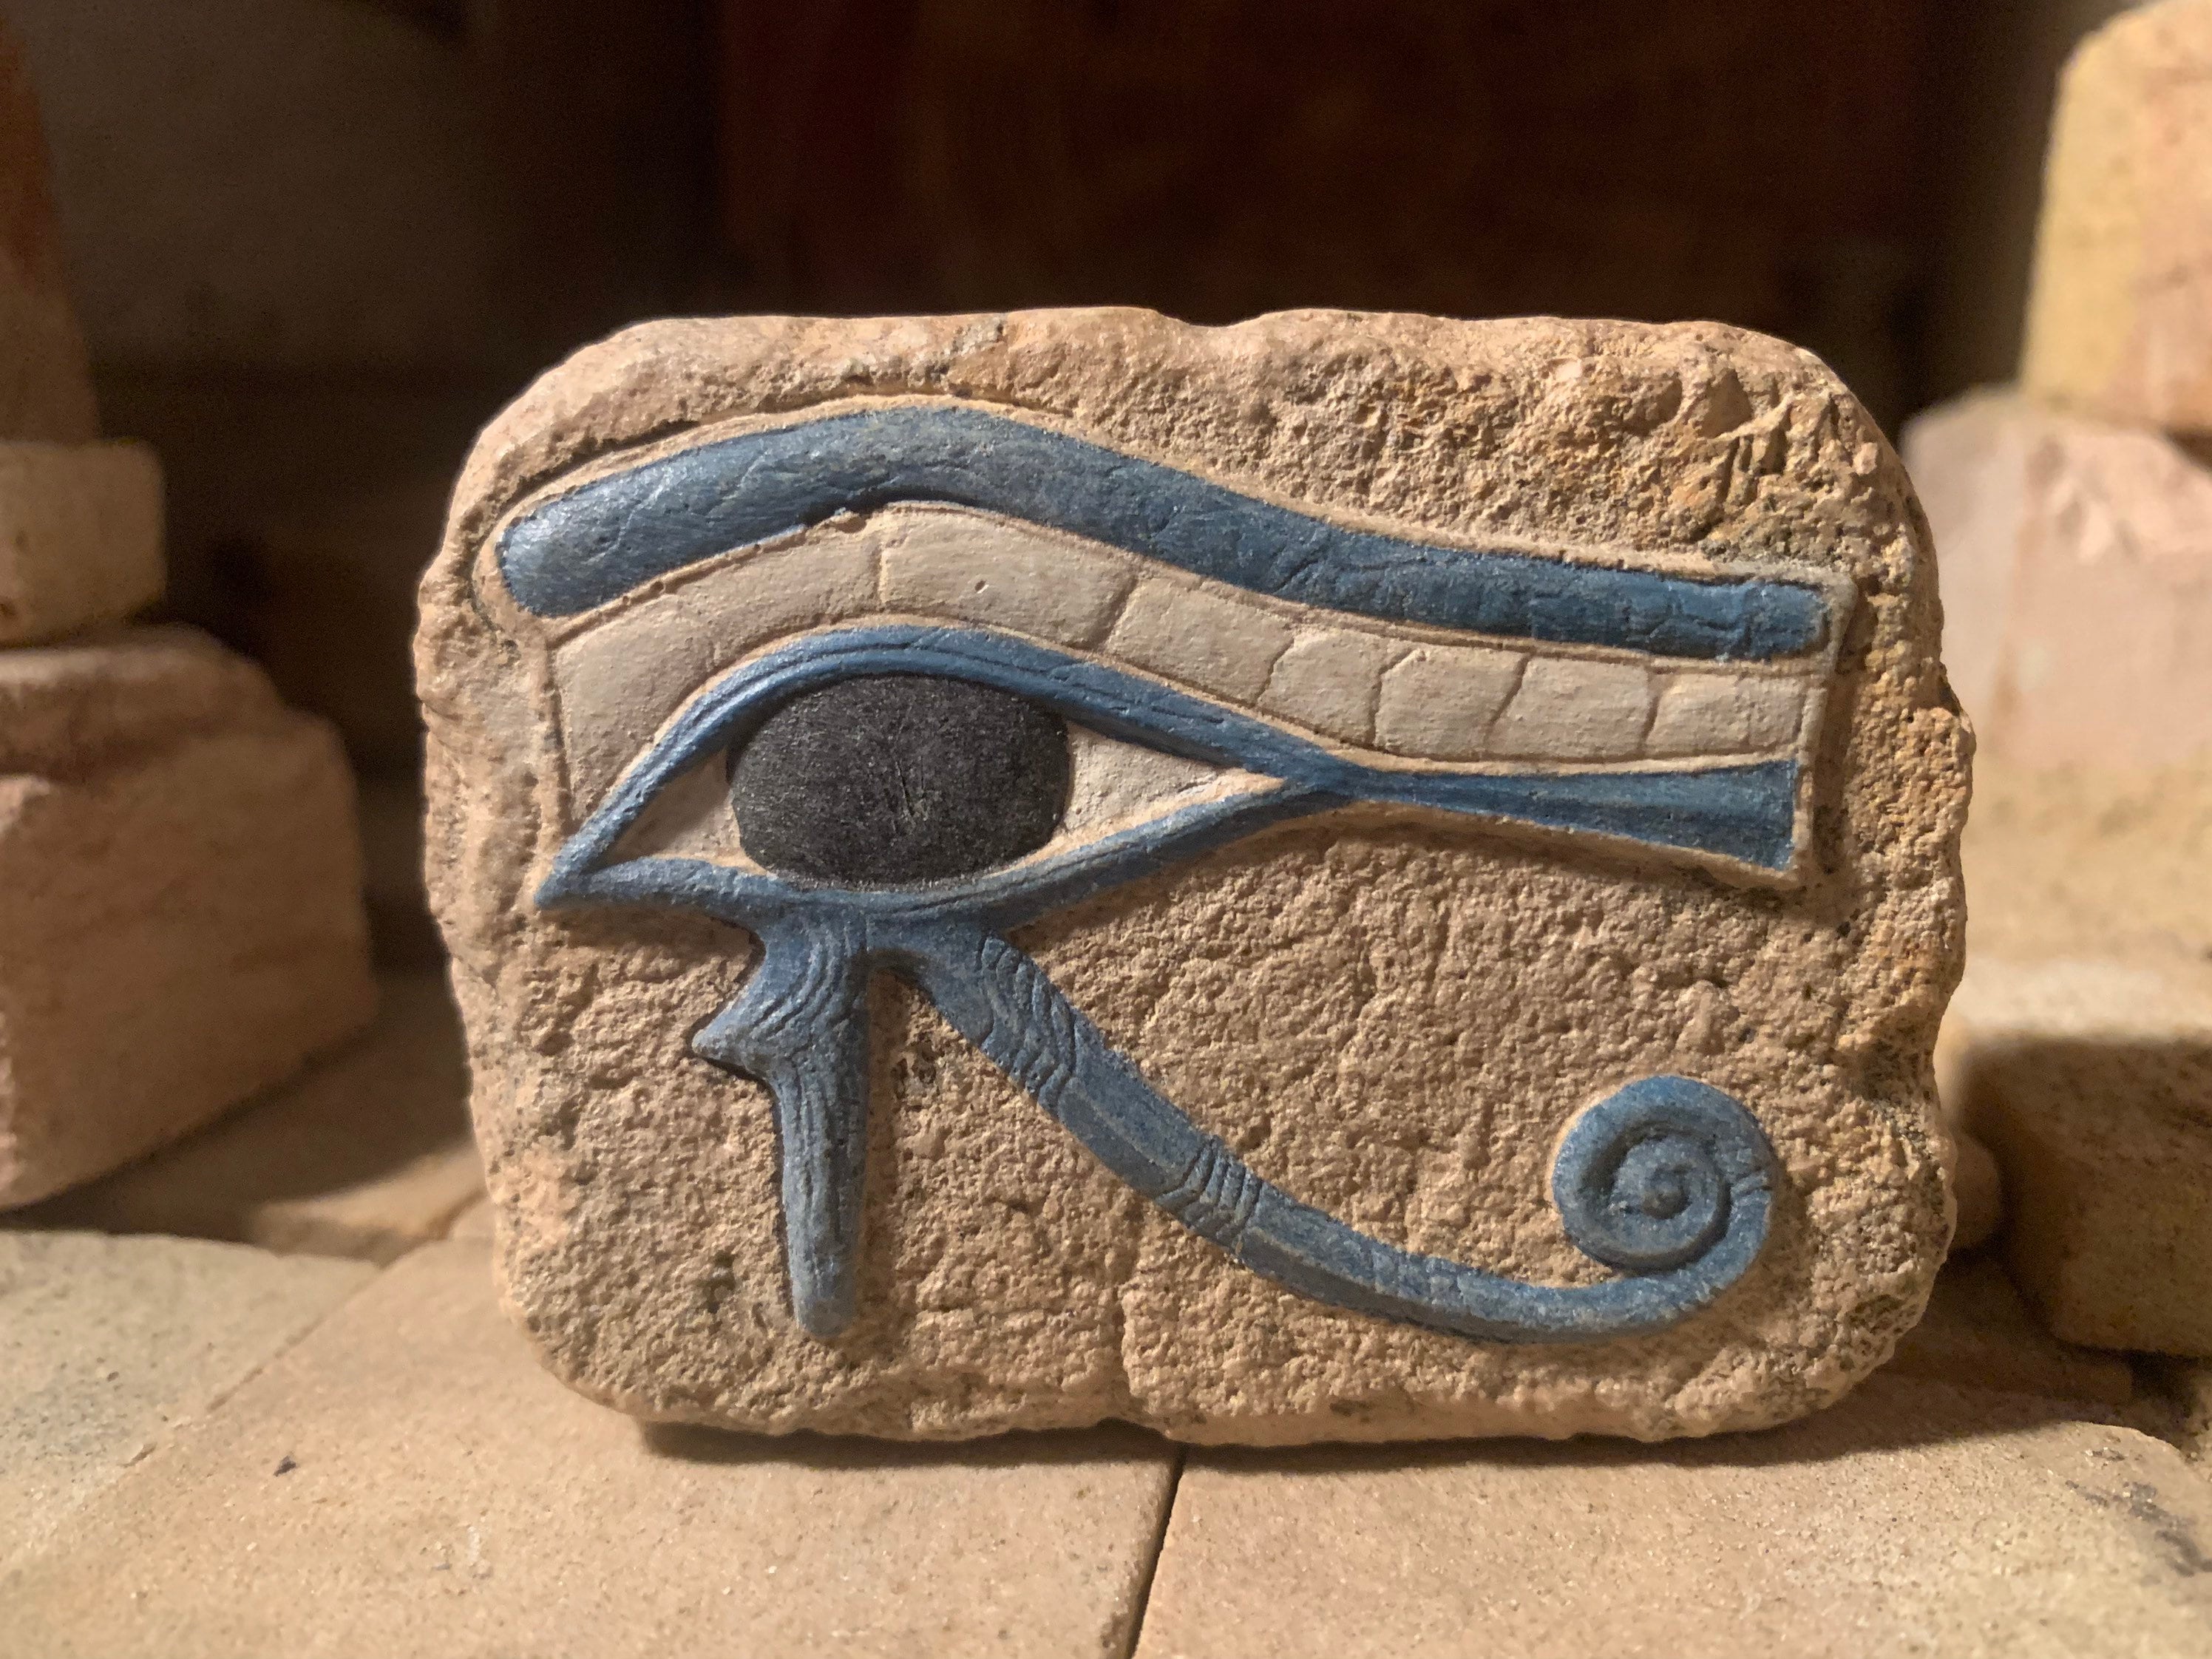 7. Eye of Horus Nail Art - wide 8